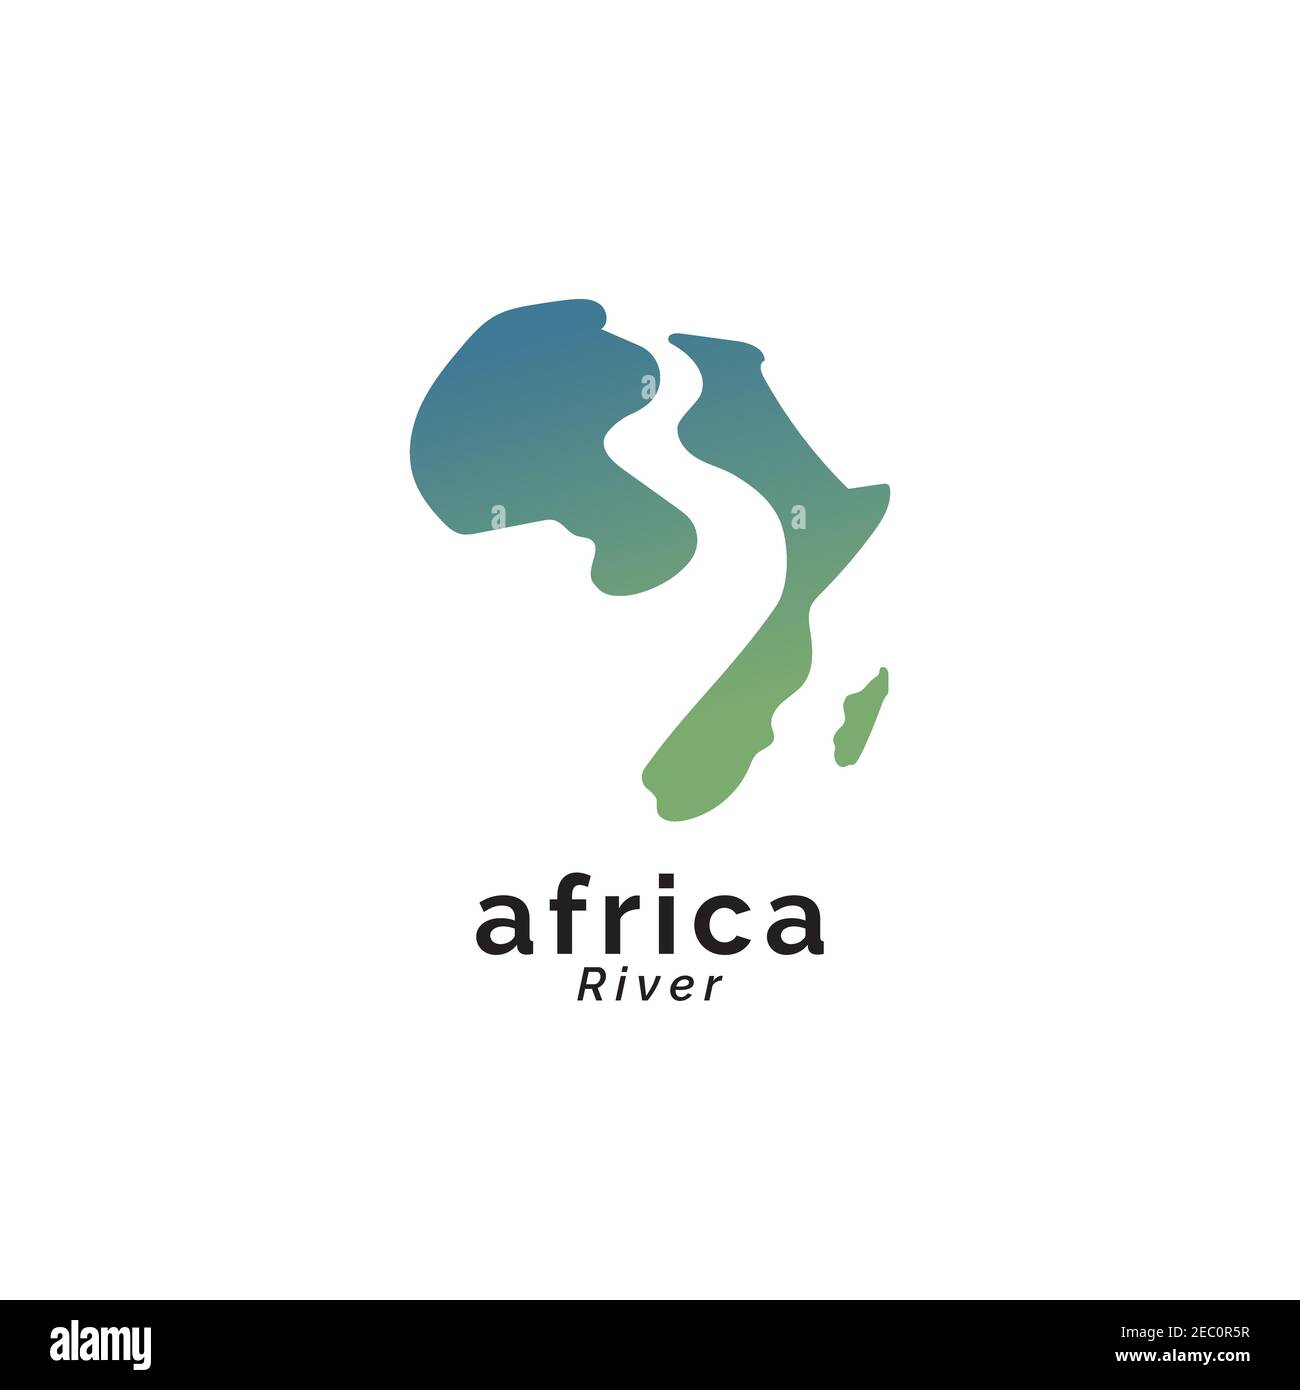 Africa river illustration logo design vector template Stock Vector